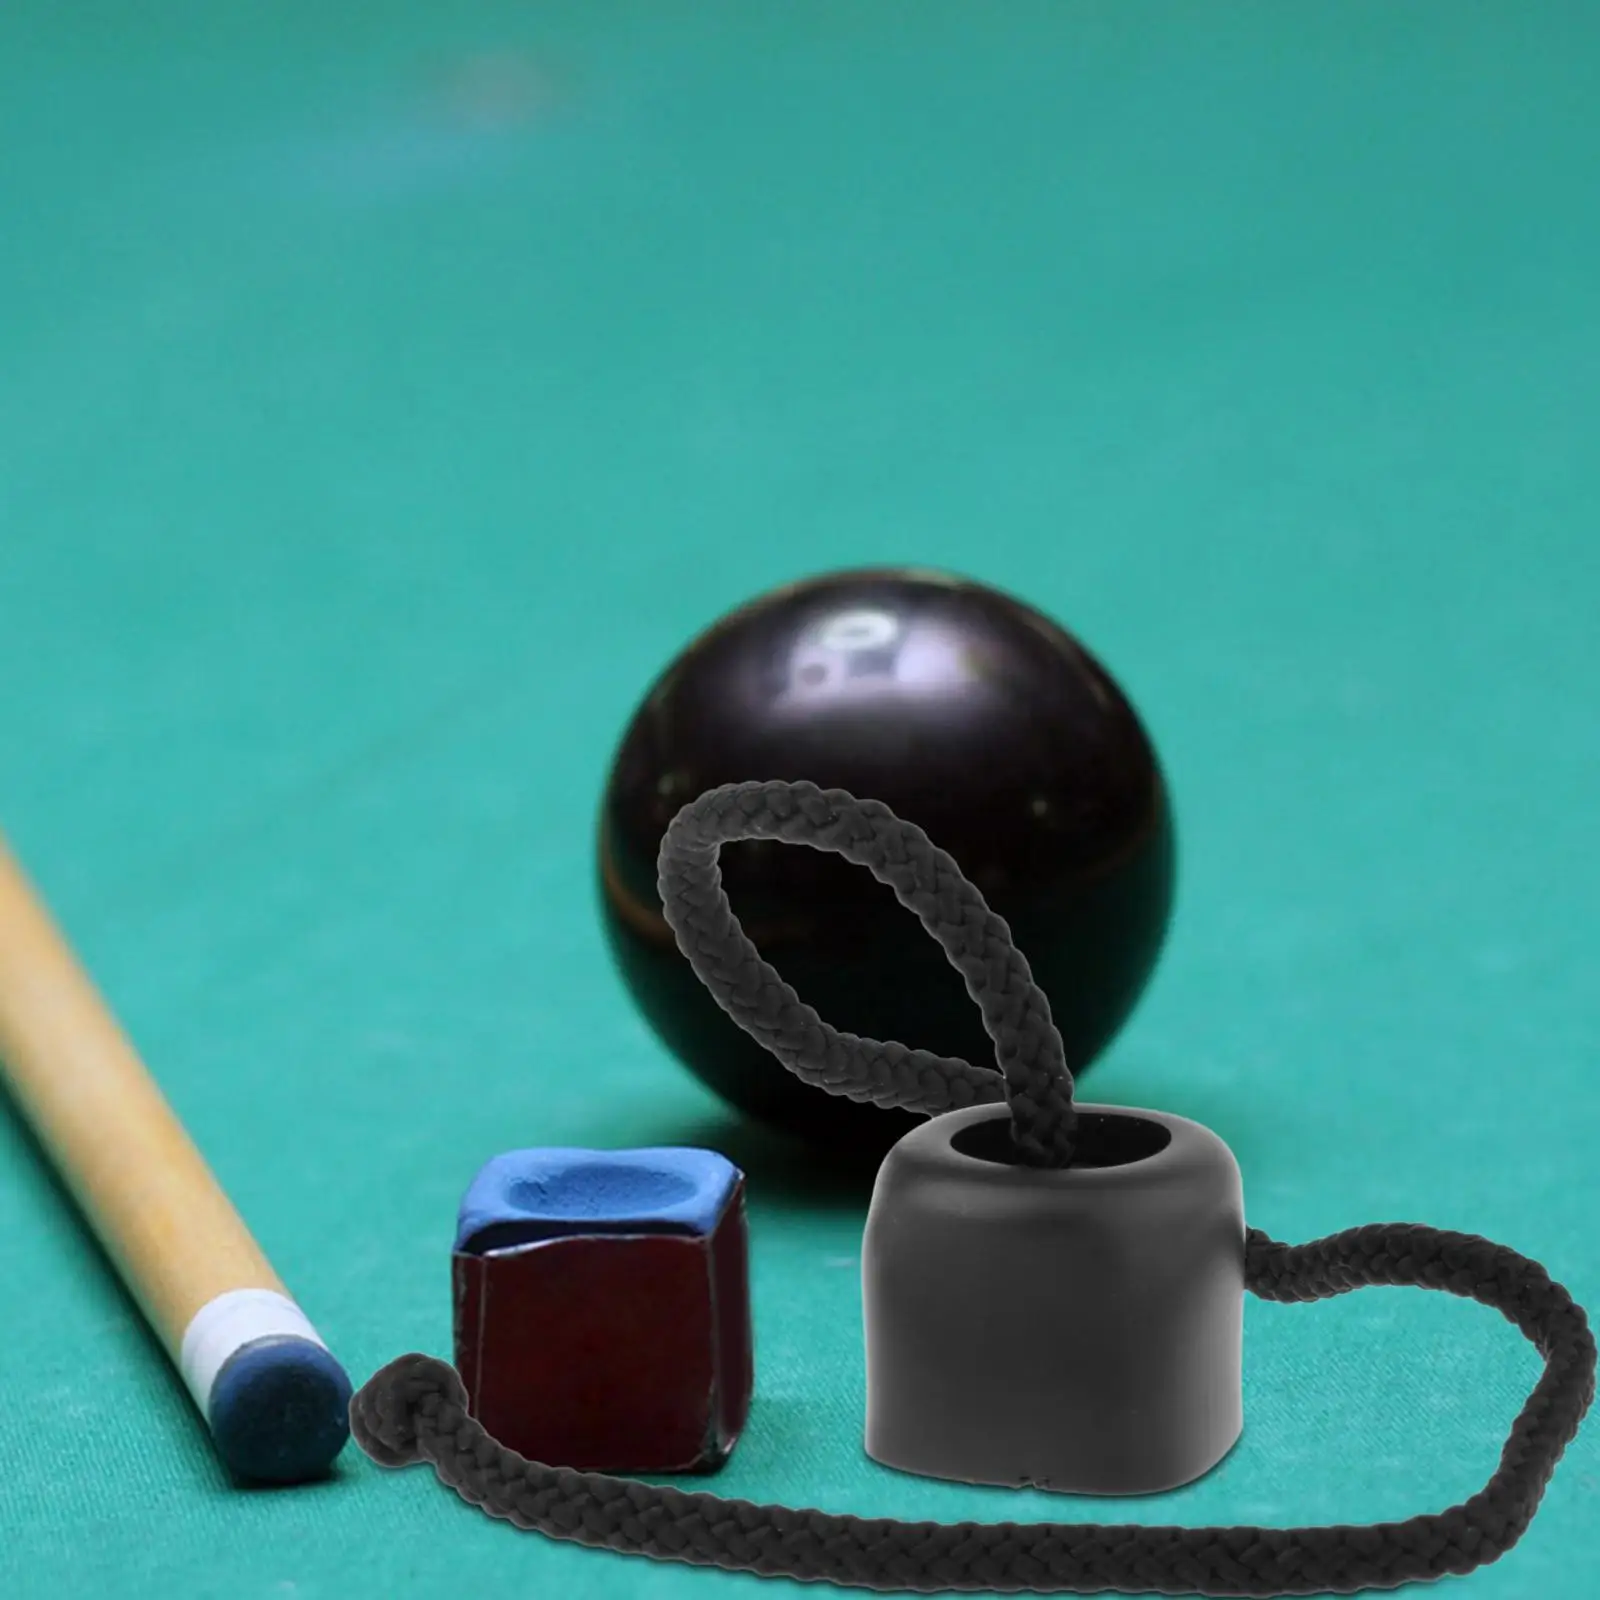 Billiard Pool Pole Chalk Holder Chalk Holder for Billiards /Portable Pool Snooker Chalk Holder /High Performance /Premium